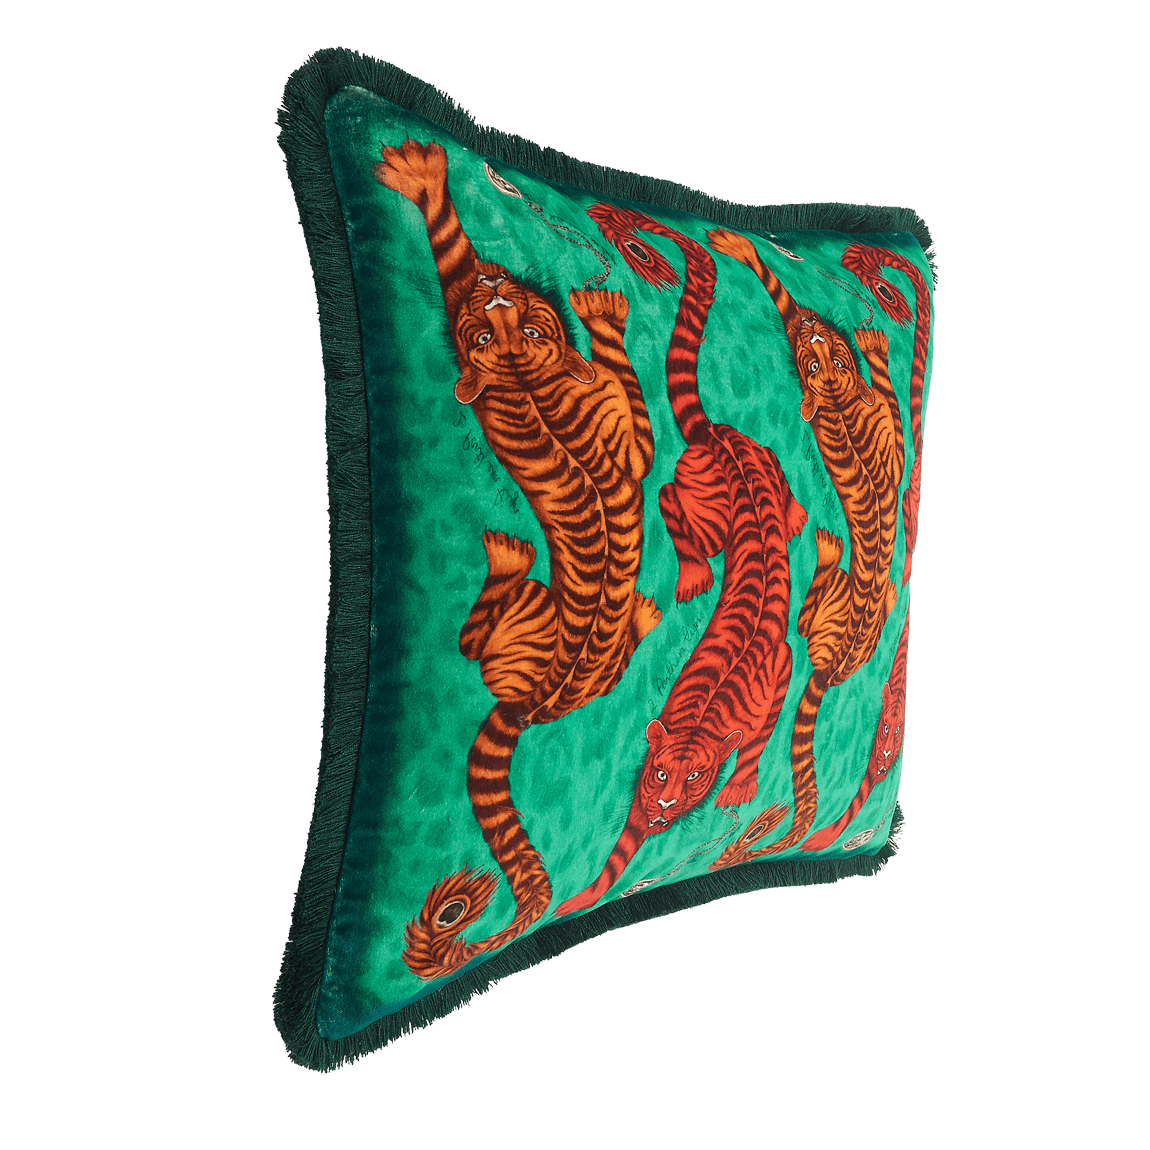 Tigris Luxury Velvet Cushion: Teal